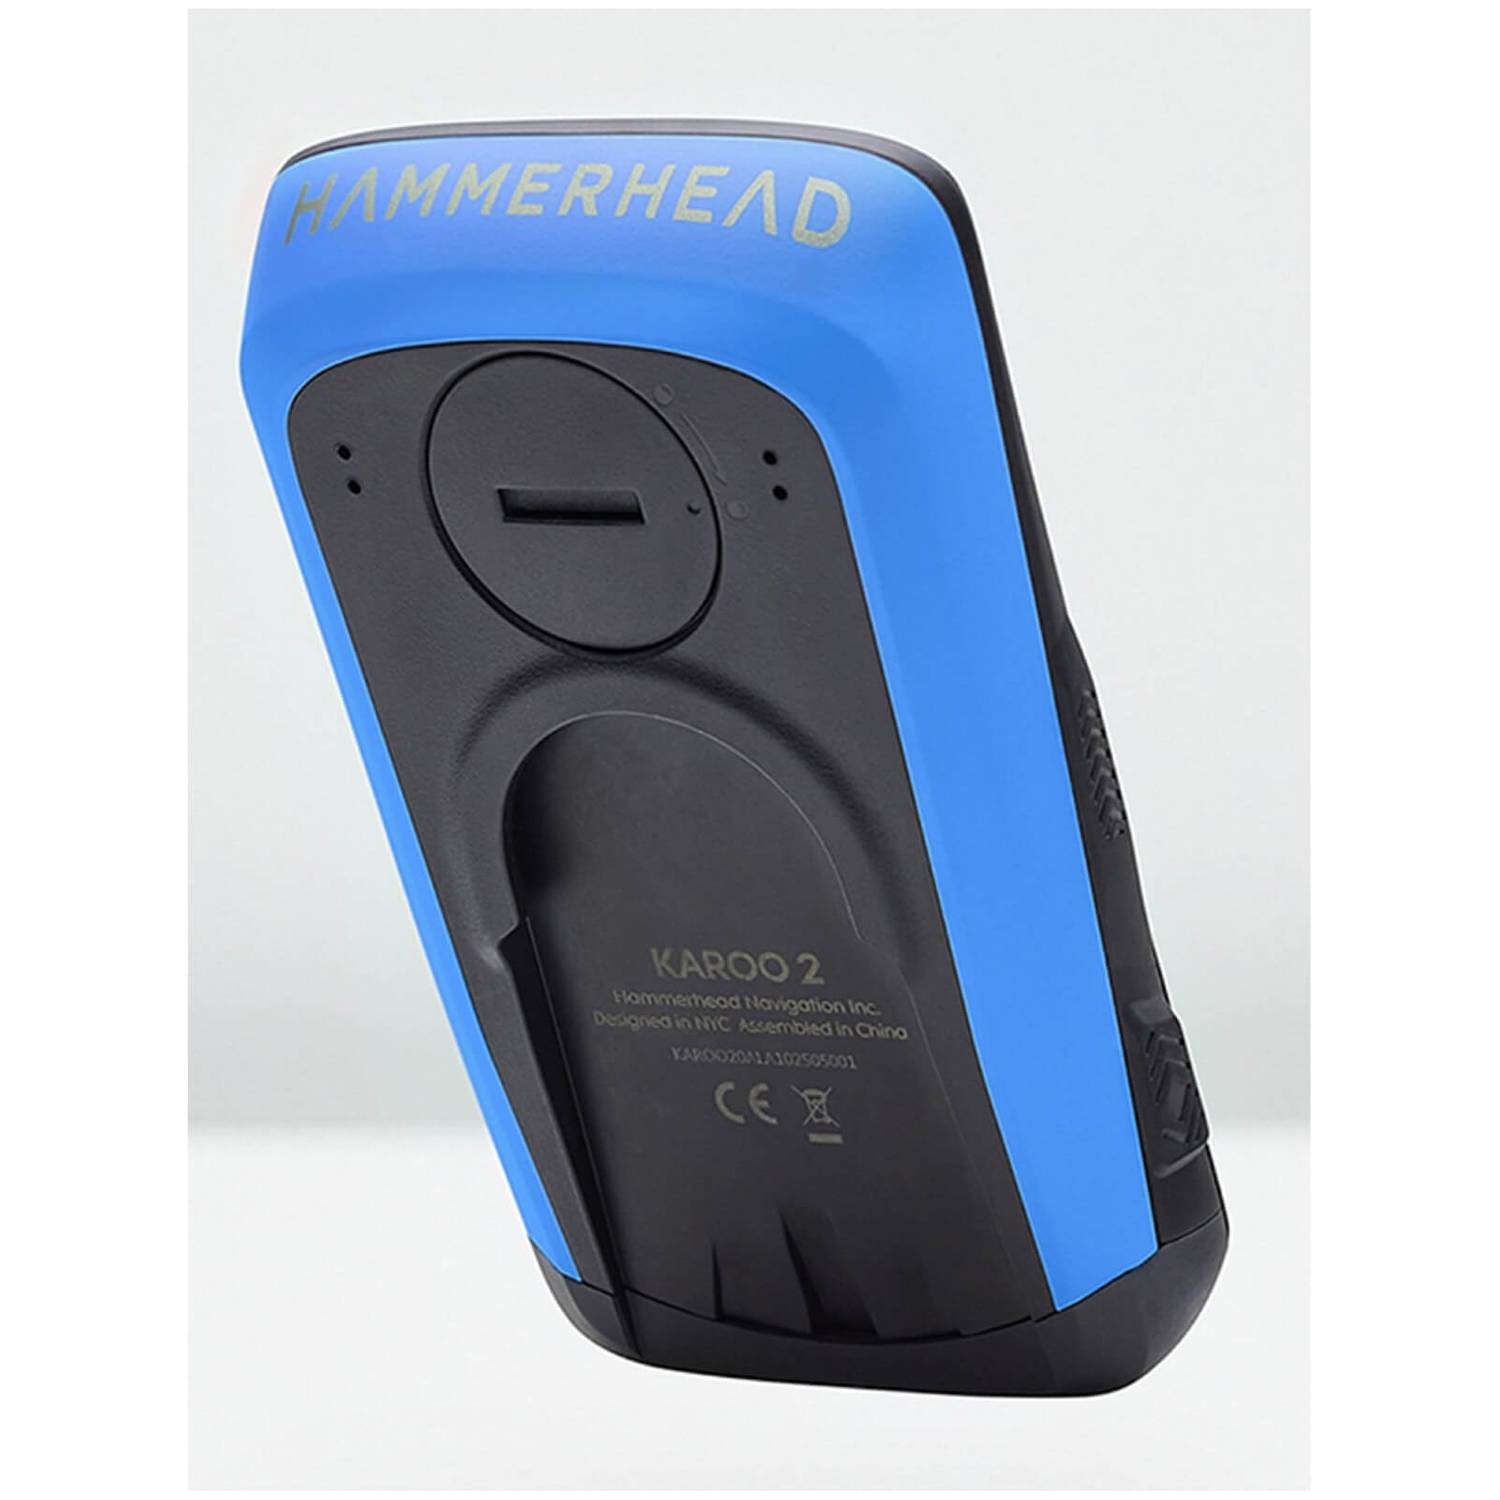 Hammerhead - Coquille Karoo 2 Couleur Personnalisée Cyclomètres GPS Hammerhead Bleu 